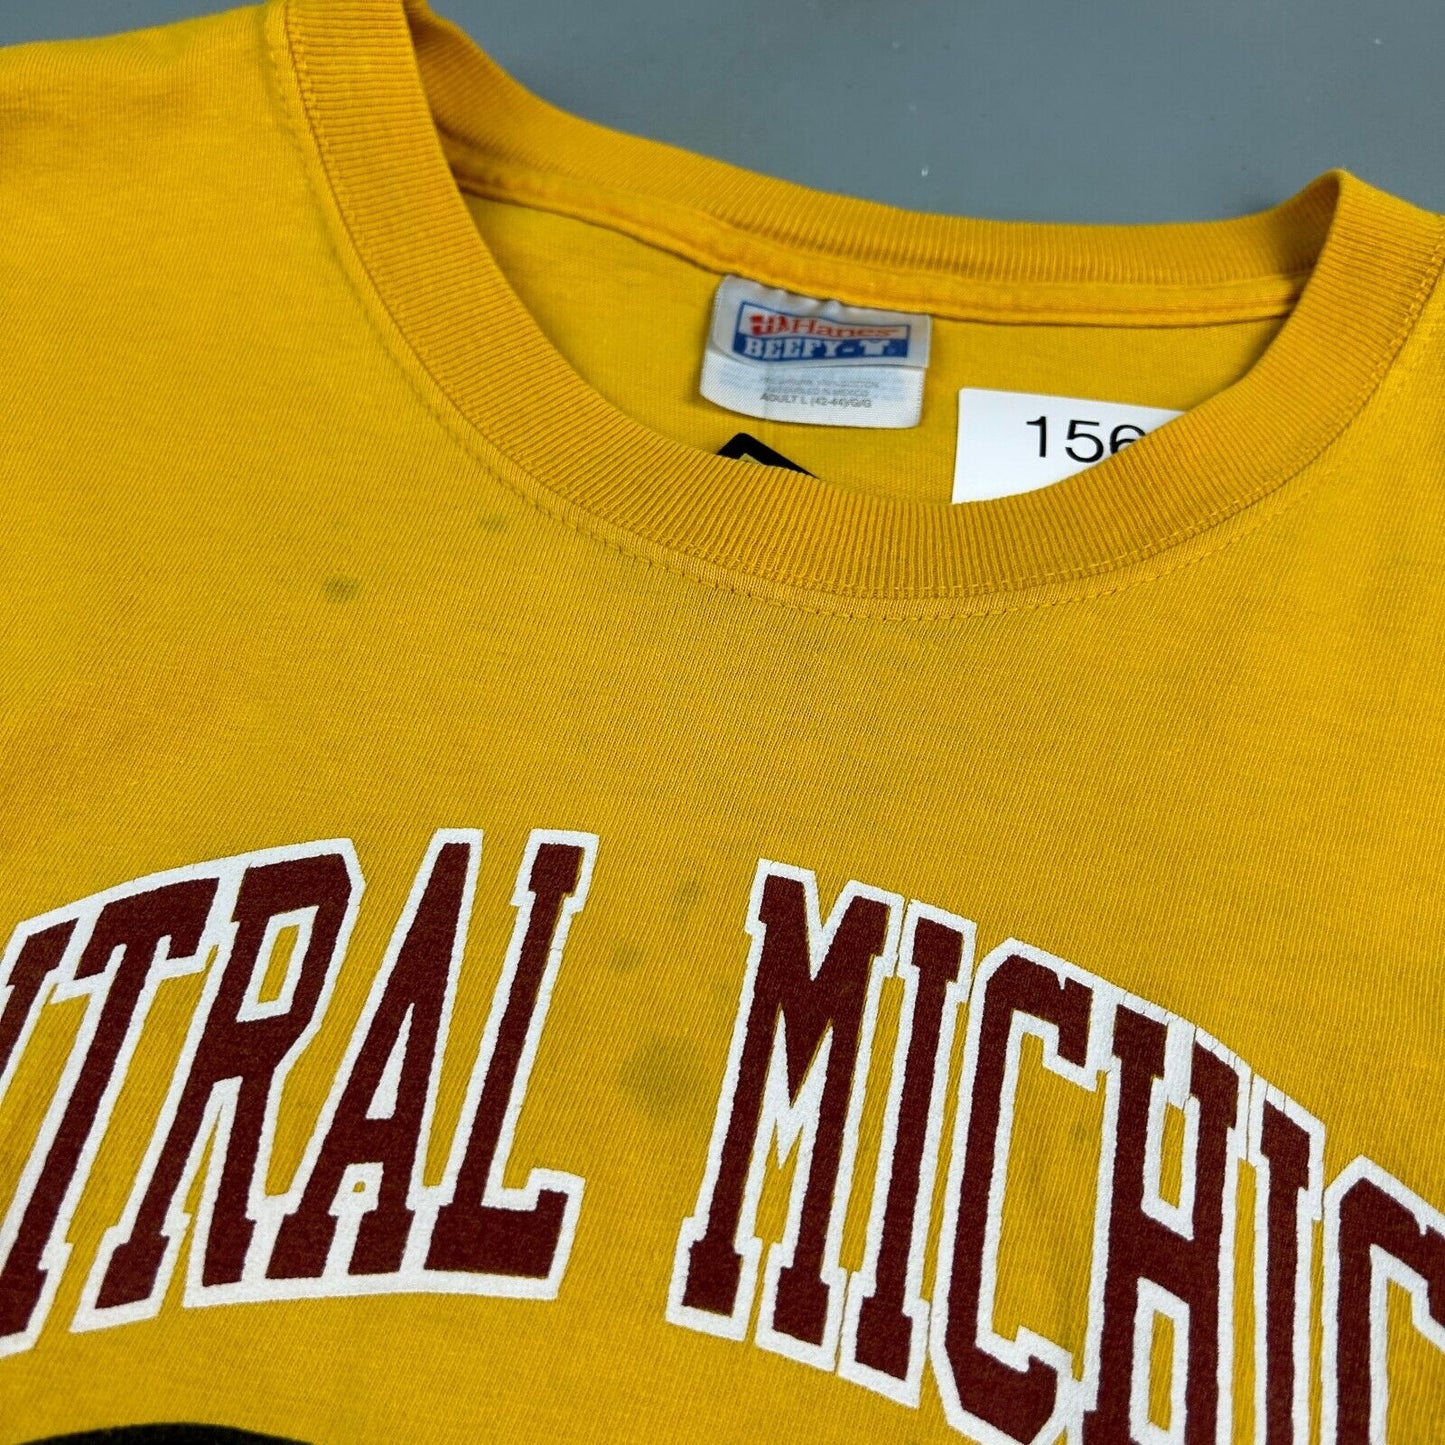 VINTAGE 03' | Central Michigan Champions Basketball T-Shirt sz L Men Adult